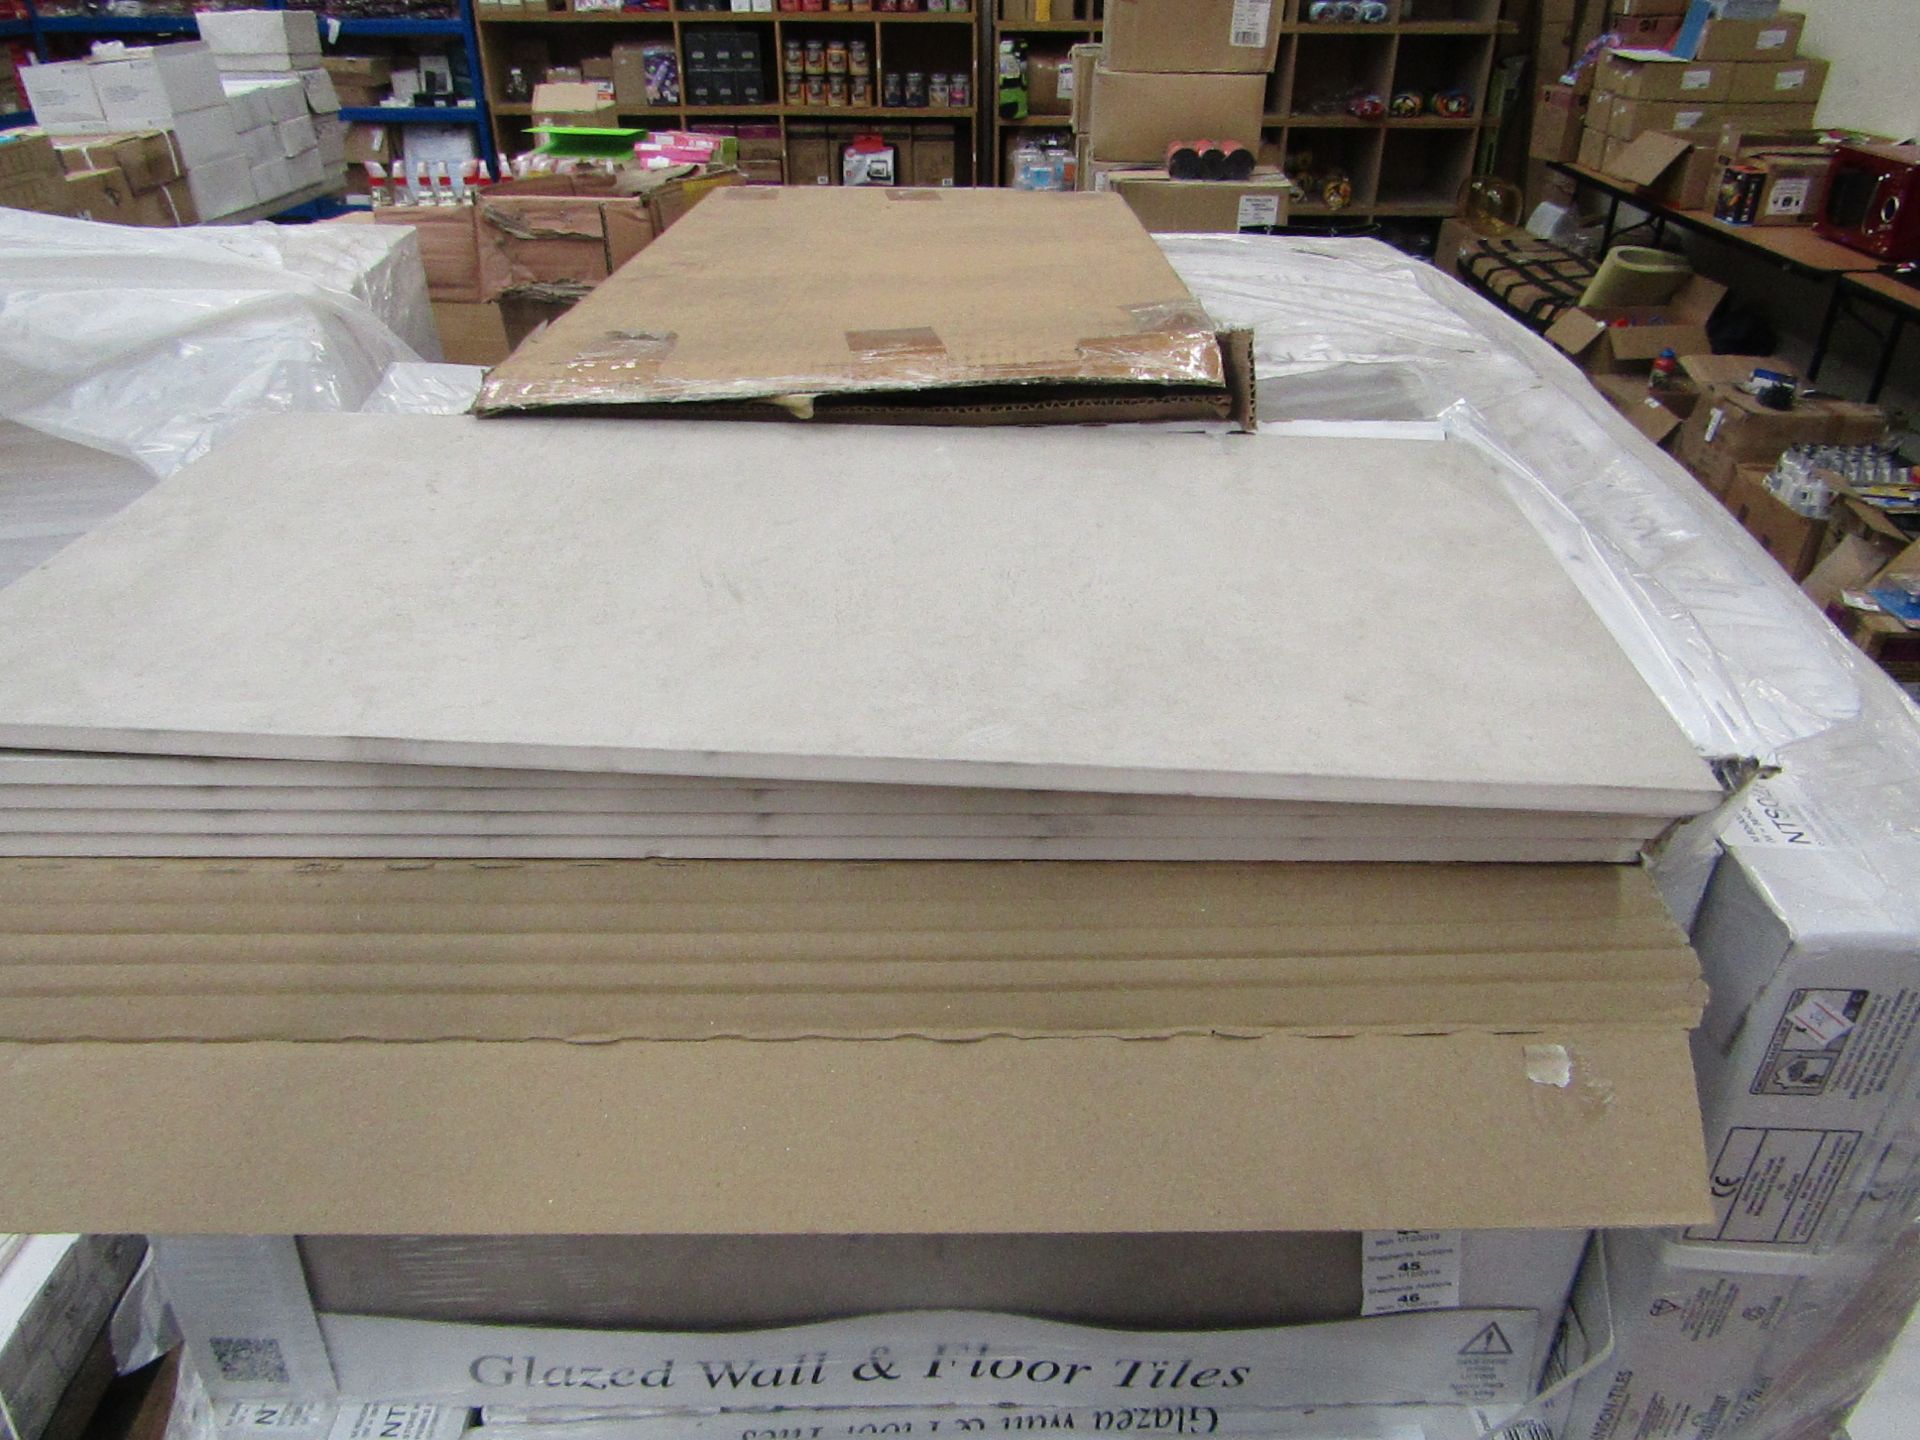 10x Packs of 5 Natt Pebble Wall Matt 300x600 wall and Floor Tiles By Johnsons, New, the RRP per pack